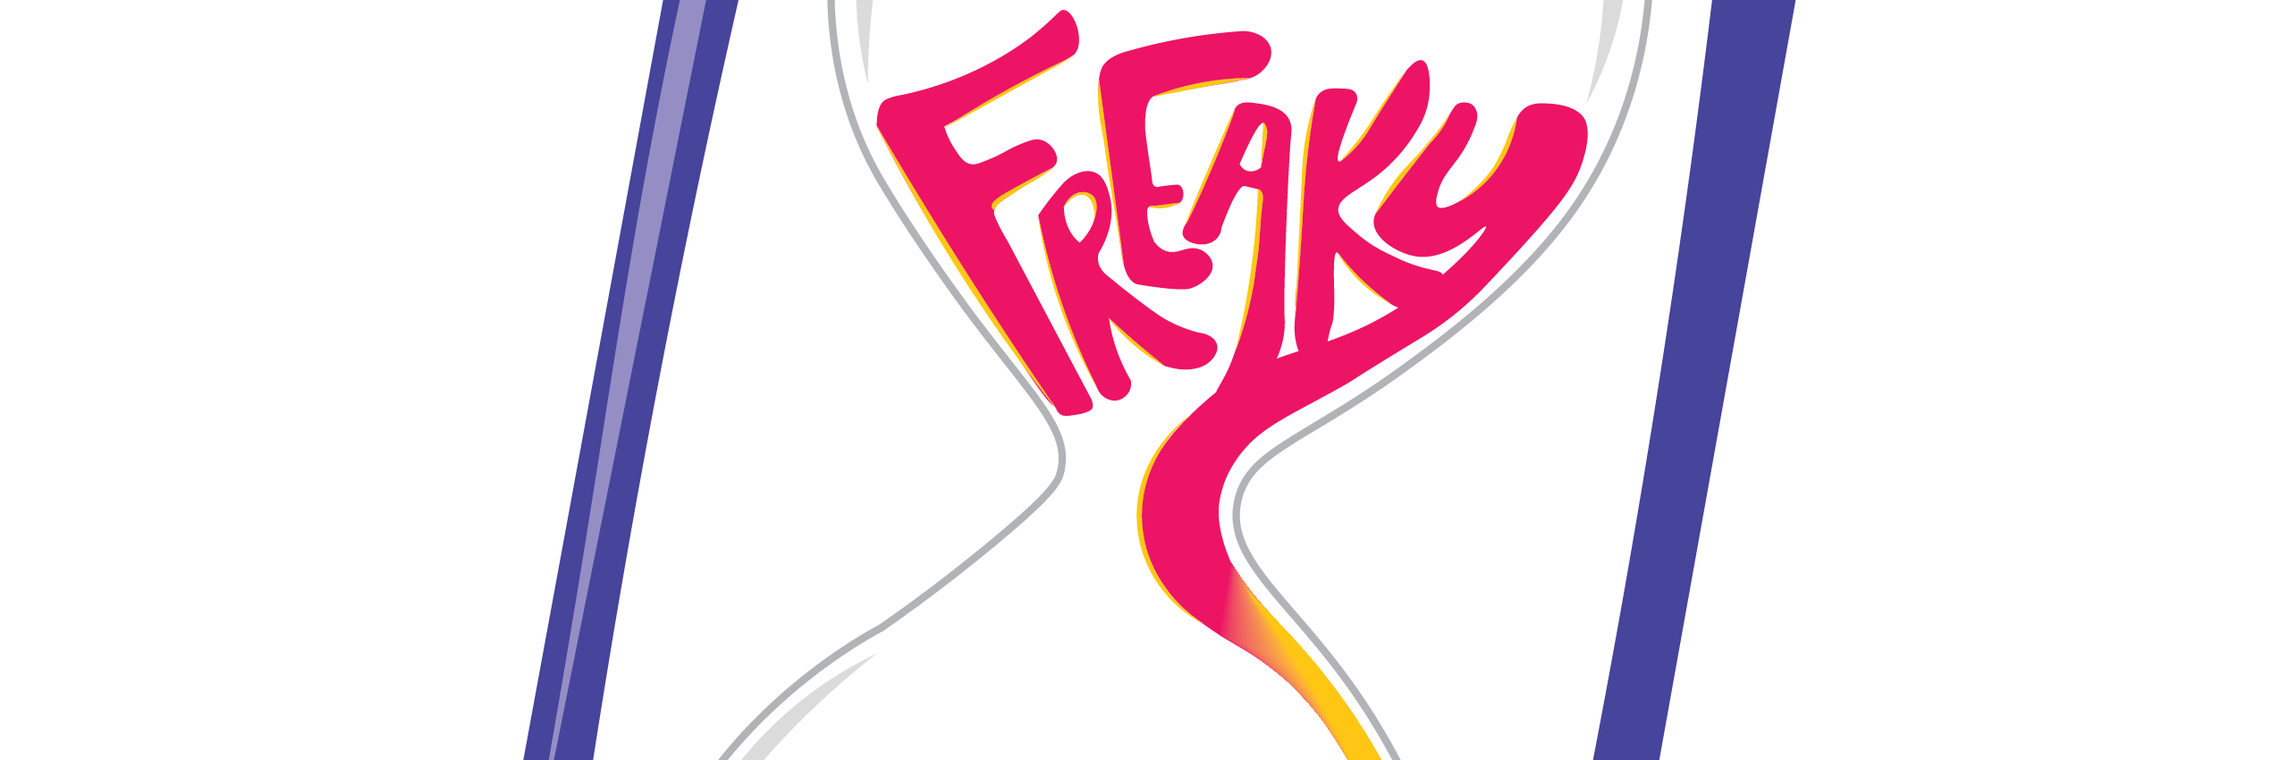 Freakyfriday 1 01